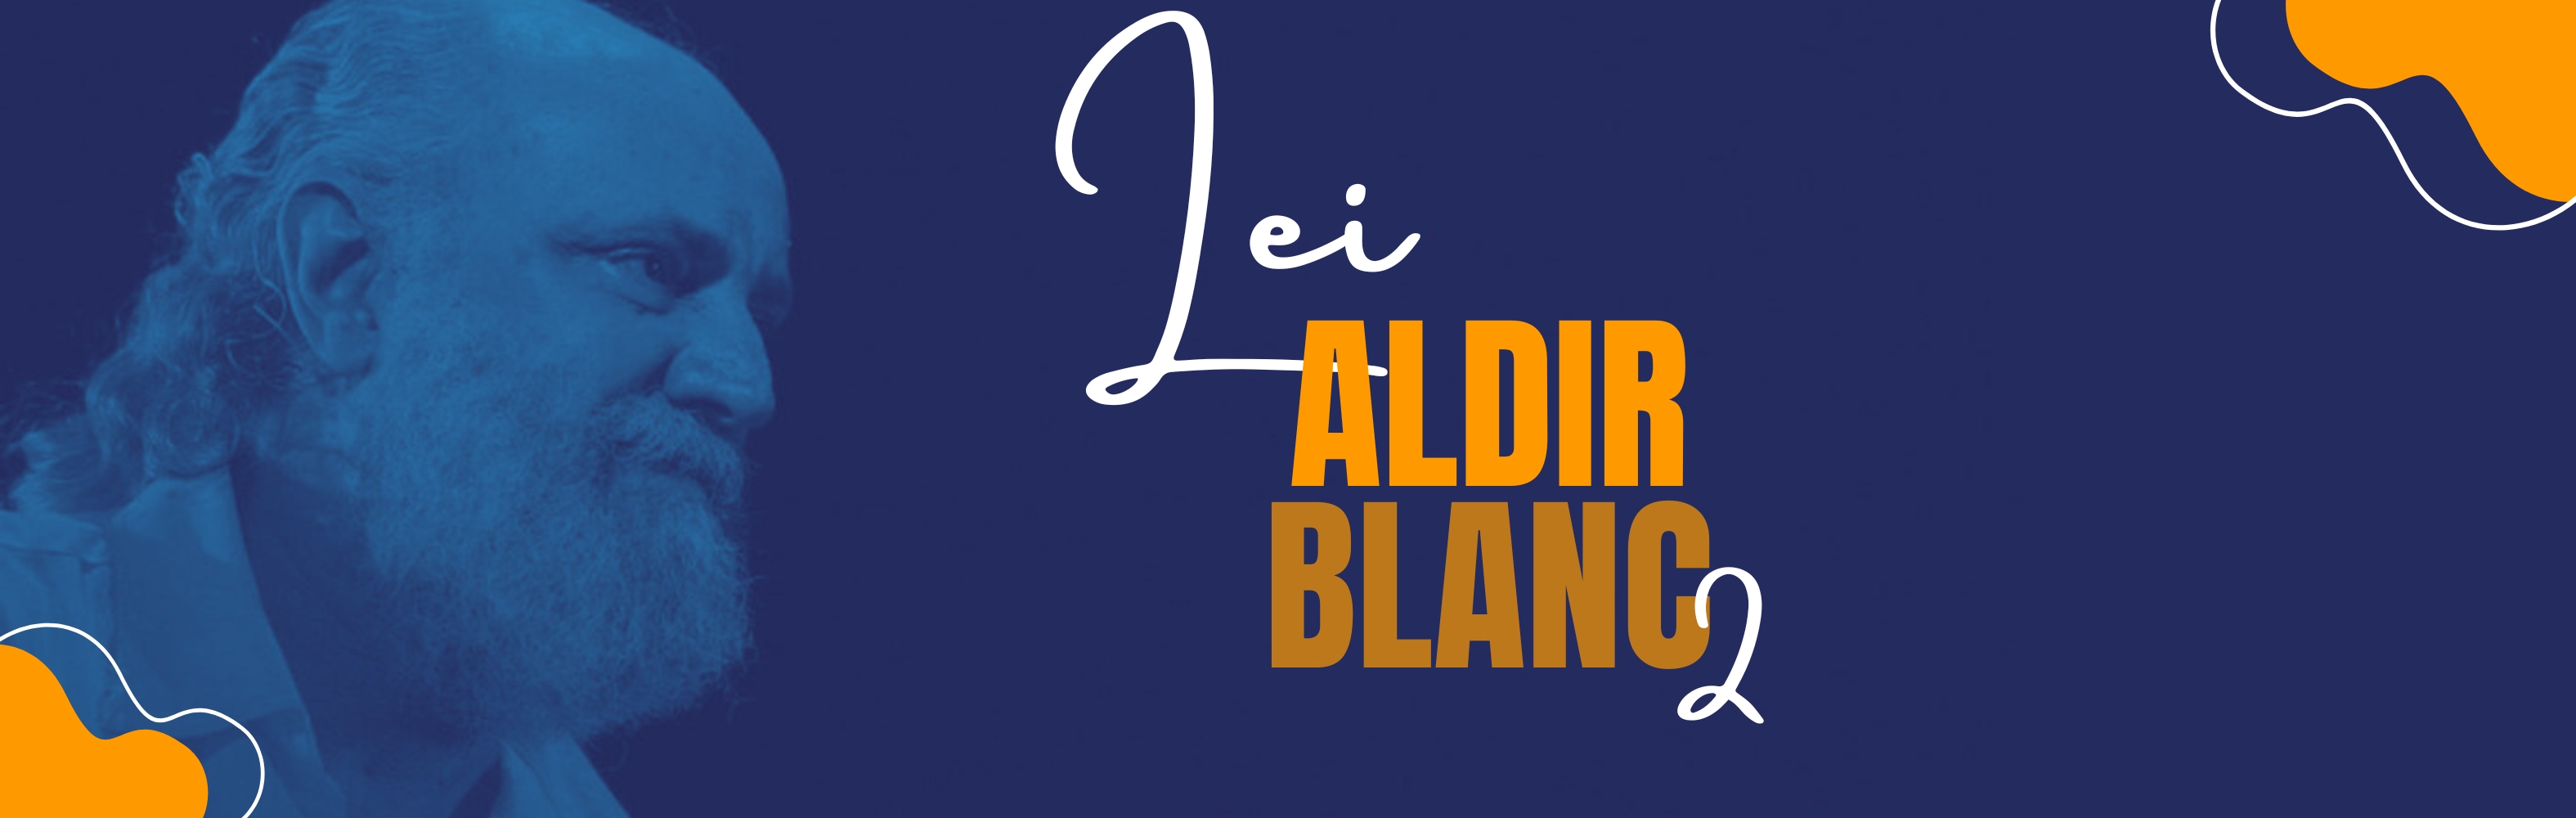 Top Aldir Blanc